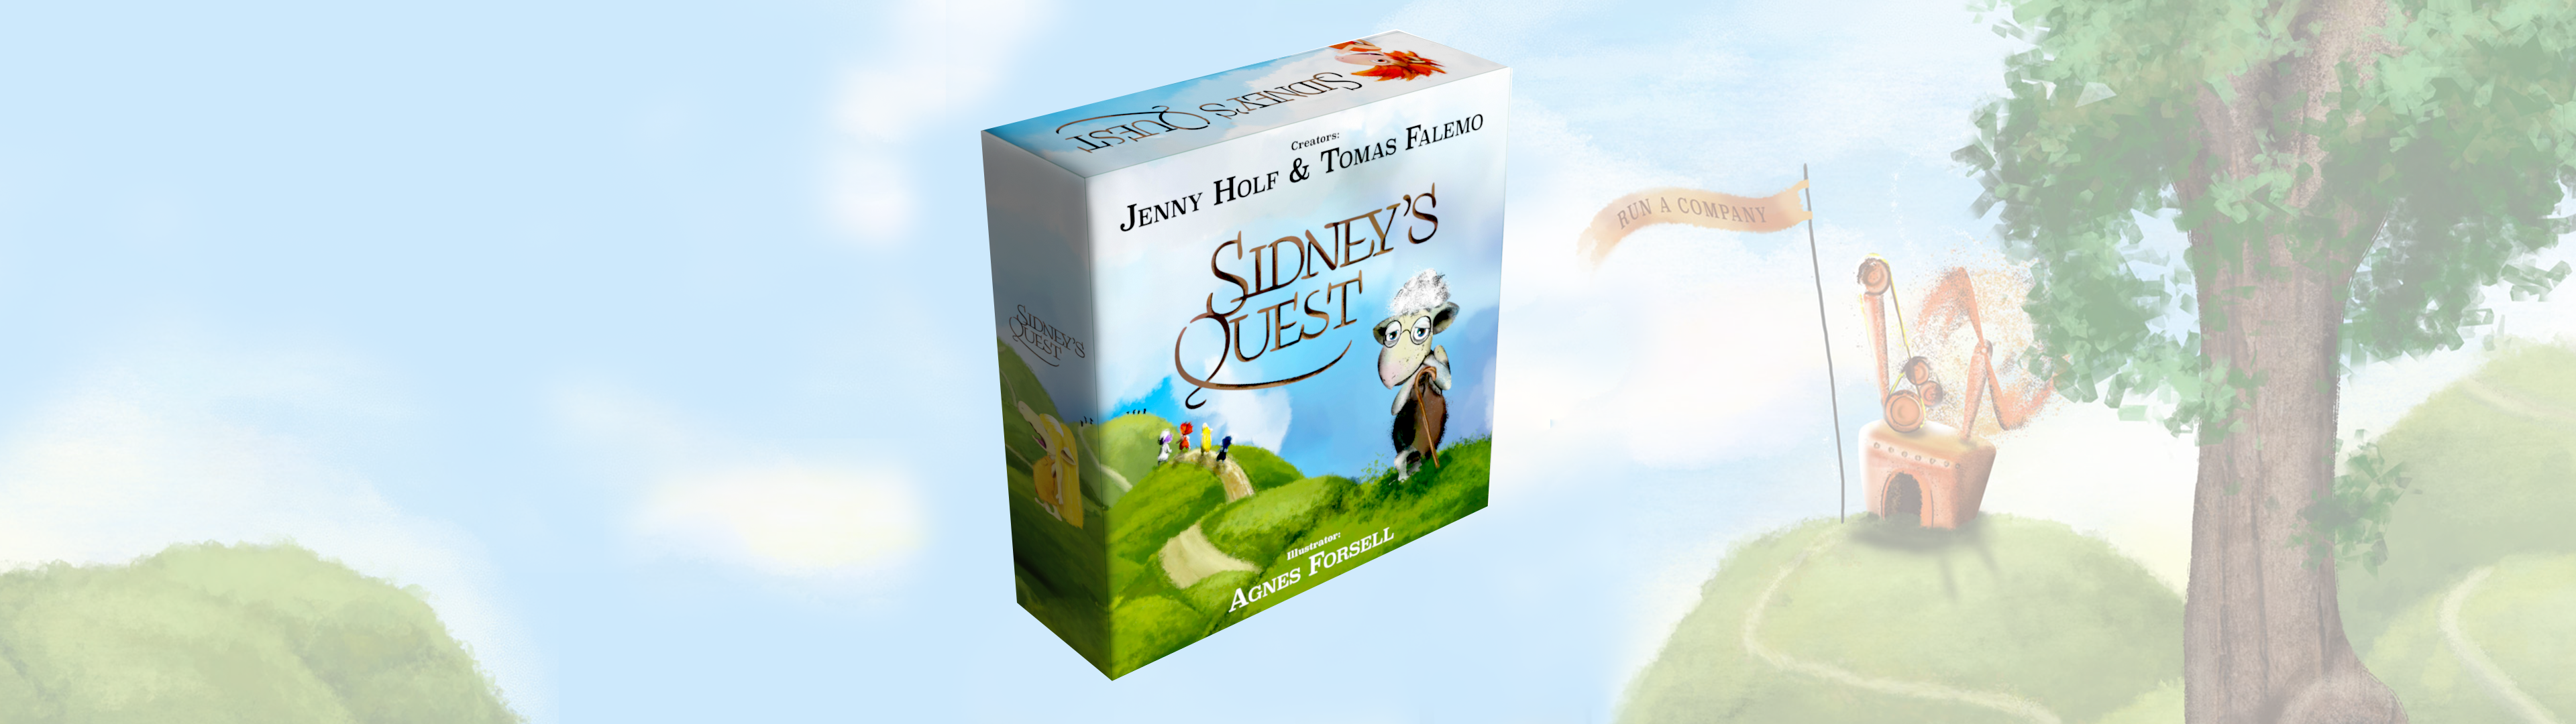 Sidneys Quest